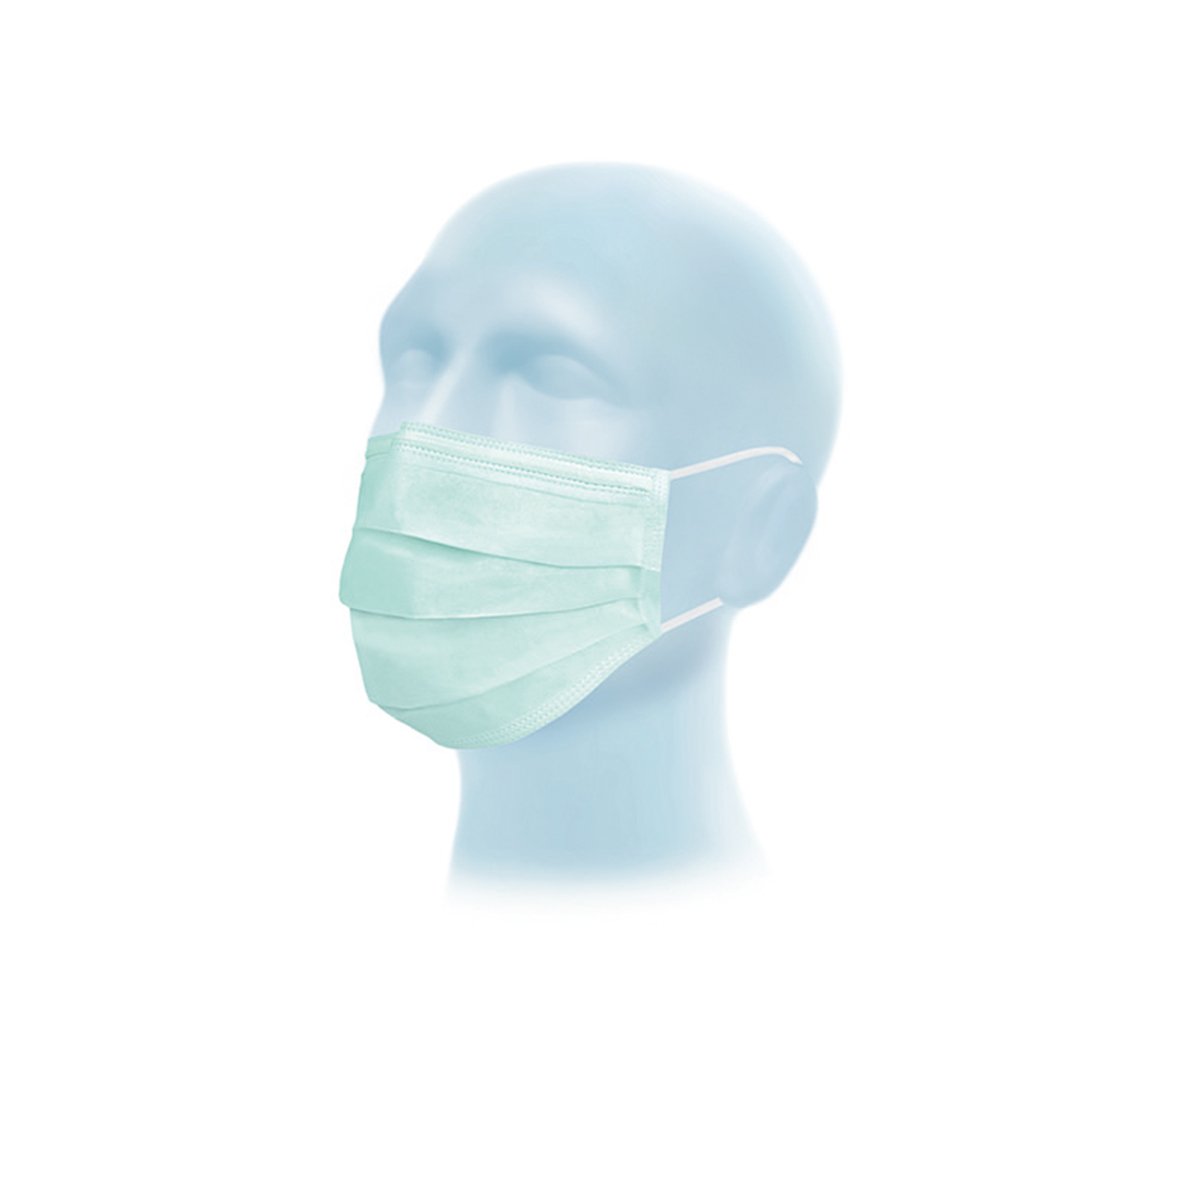 Fluid resistant mask